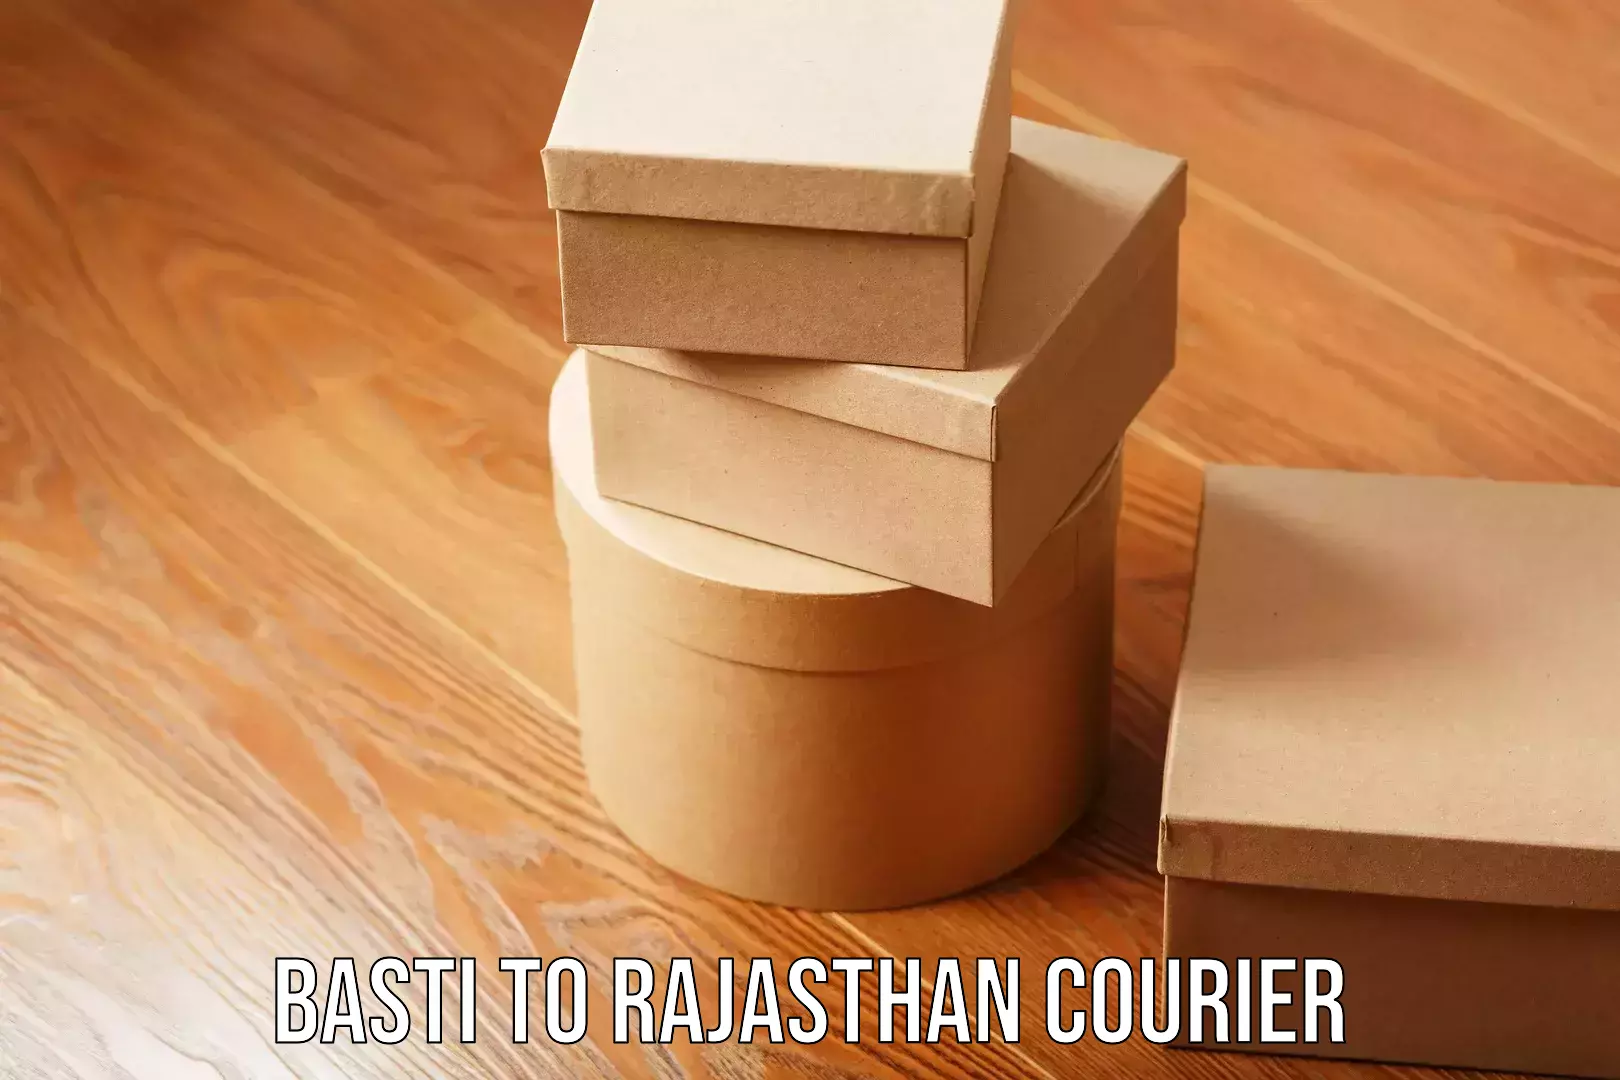 Digital courier platforms Basti to Rajasthan